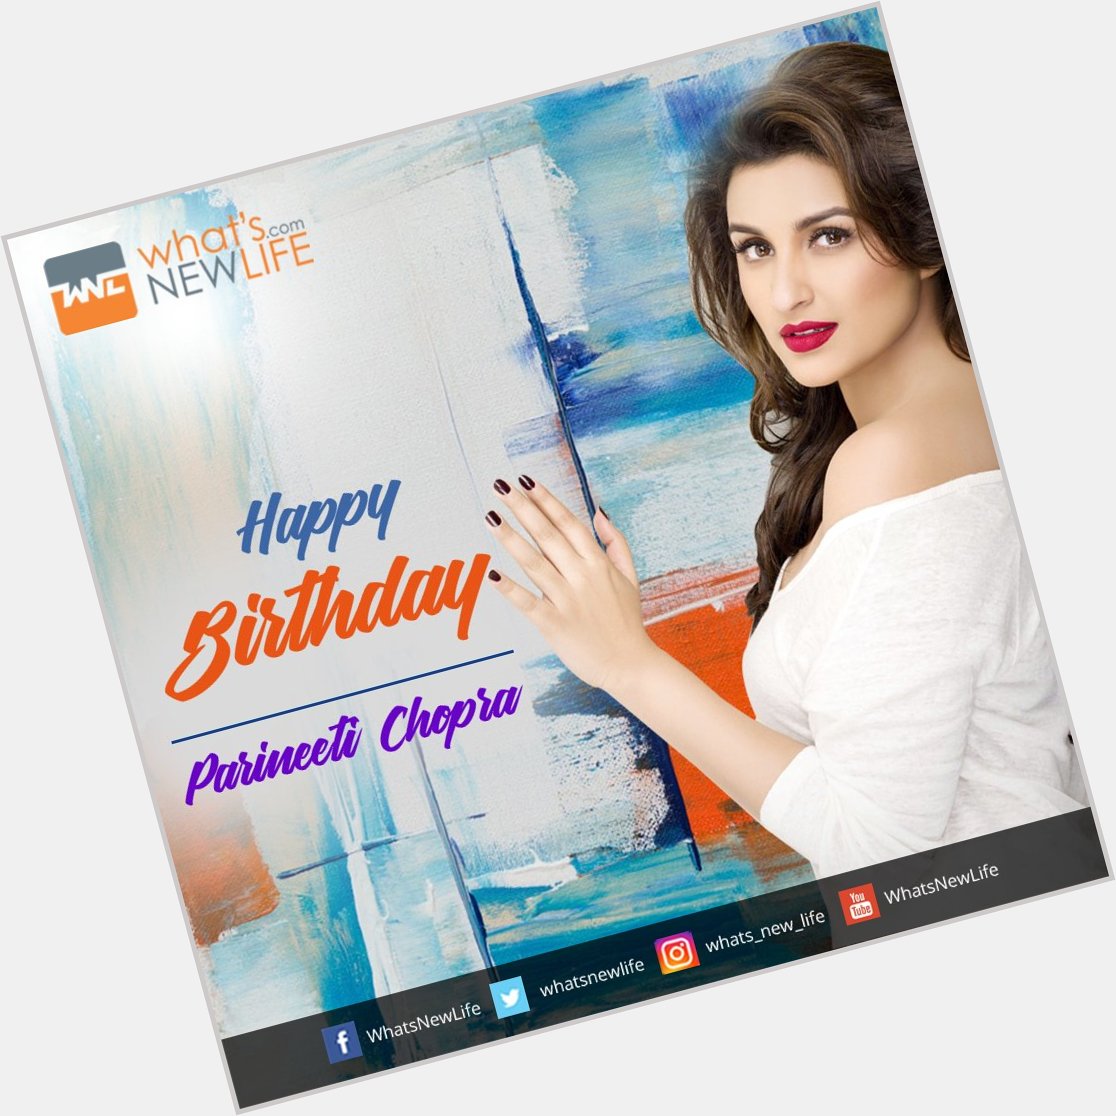 What\s New Life wishes to Bollywood actress Parineeti Chopra very happy birthday.  